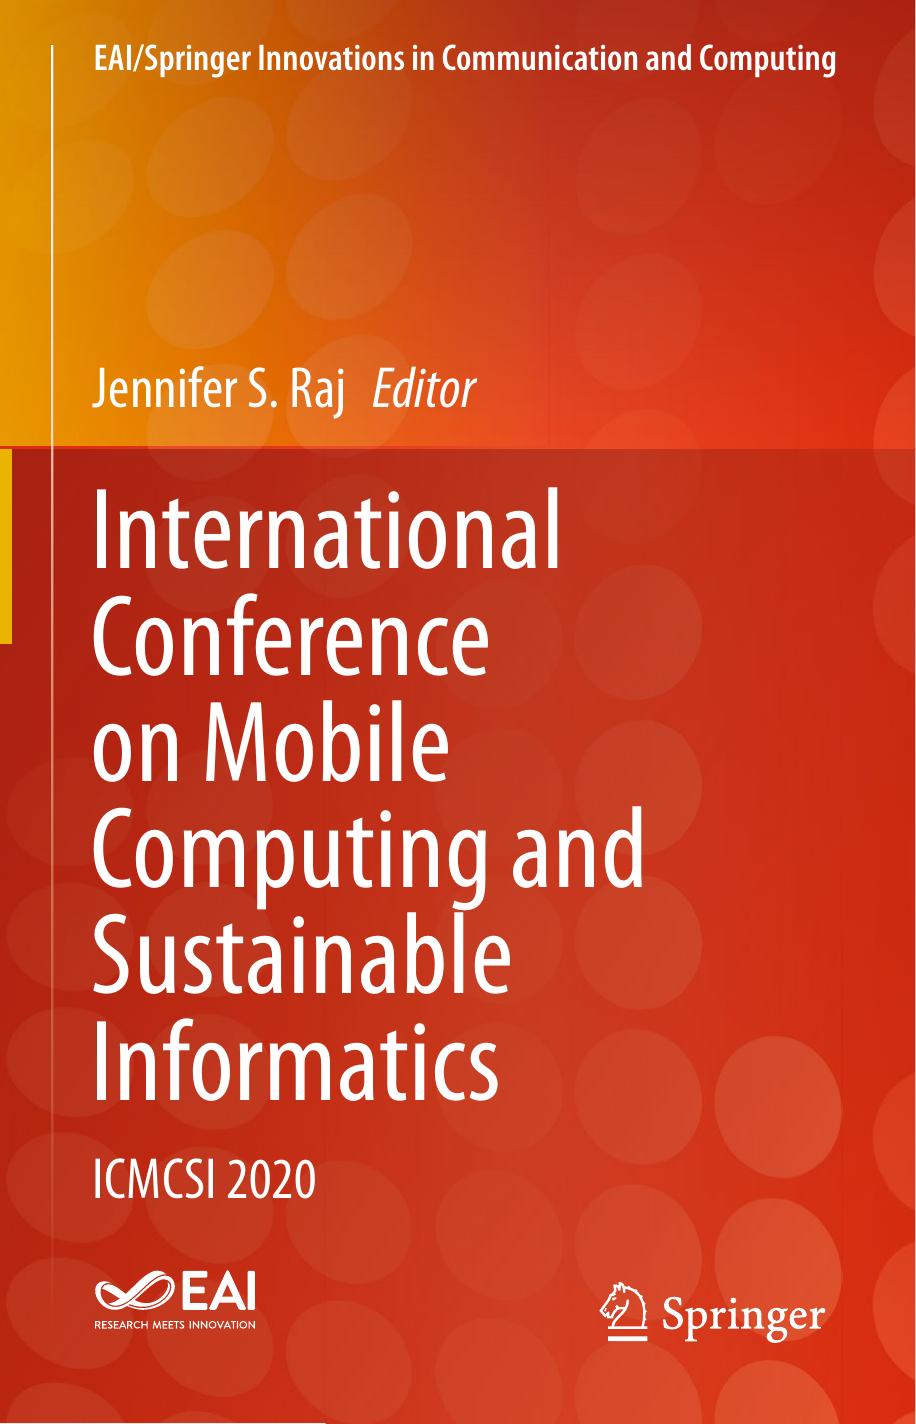 (EAI Springer Innovations in Communication and Computing) Jennifer S. Raj